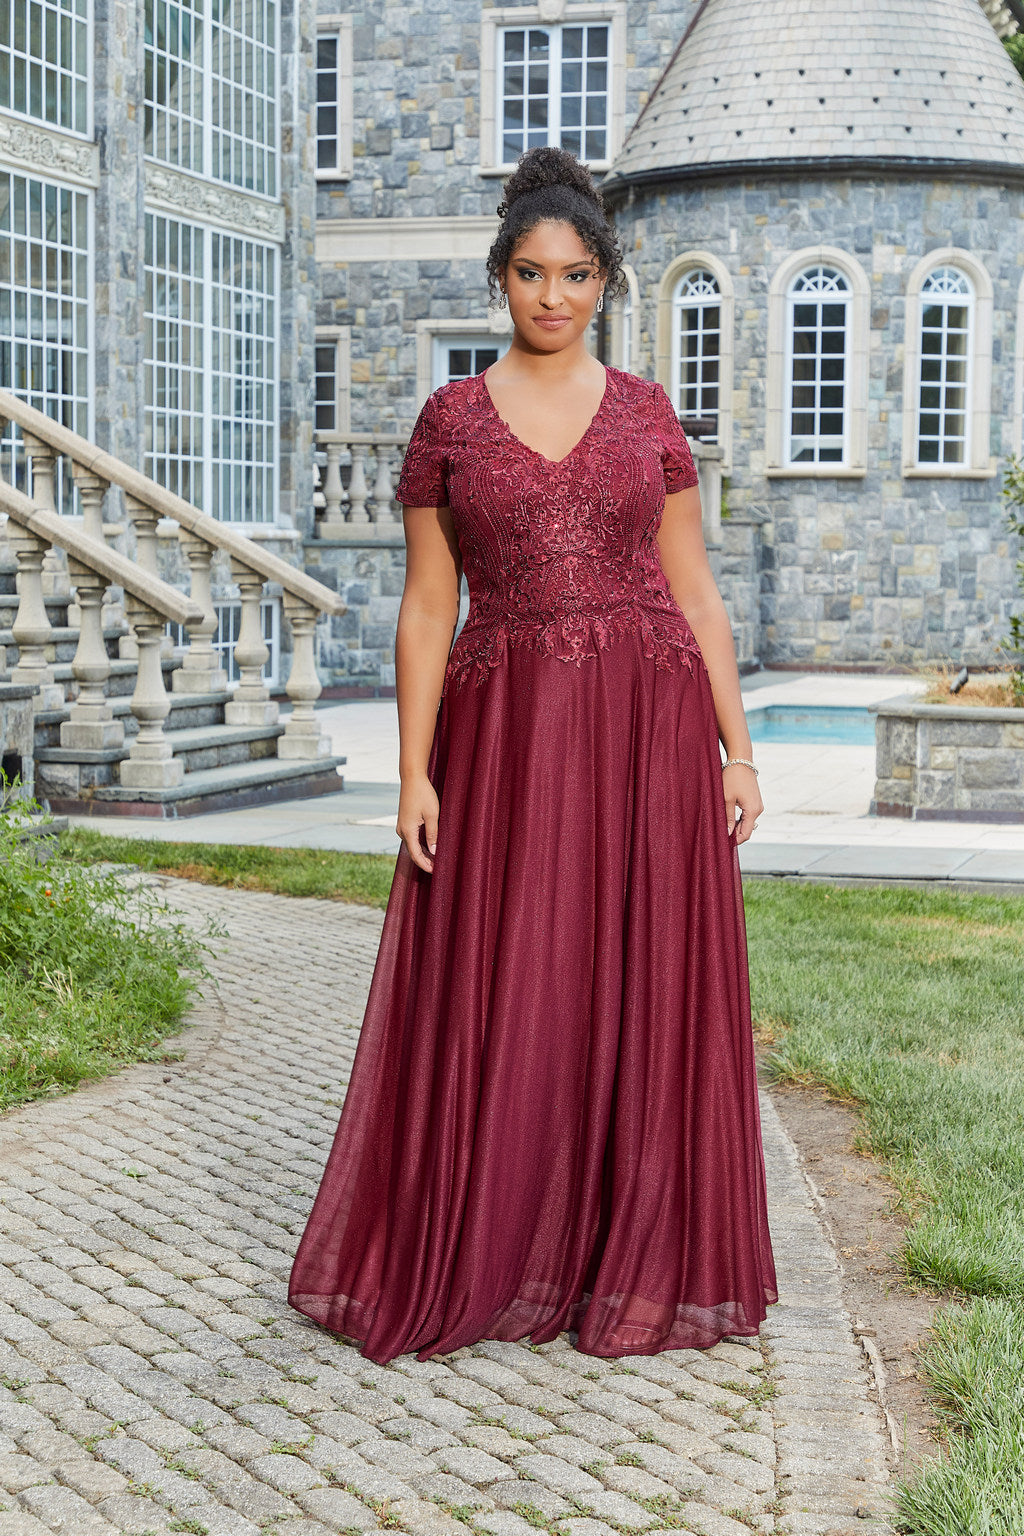  Long Formal Evening Dress Ruby